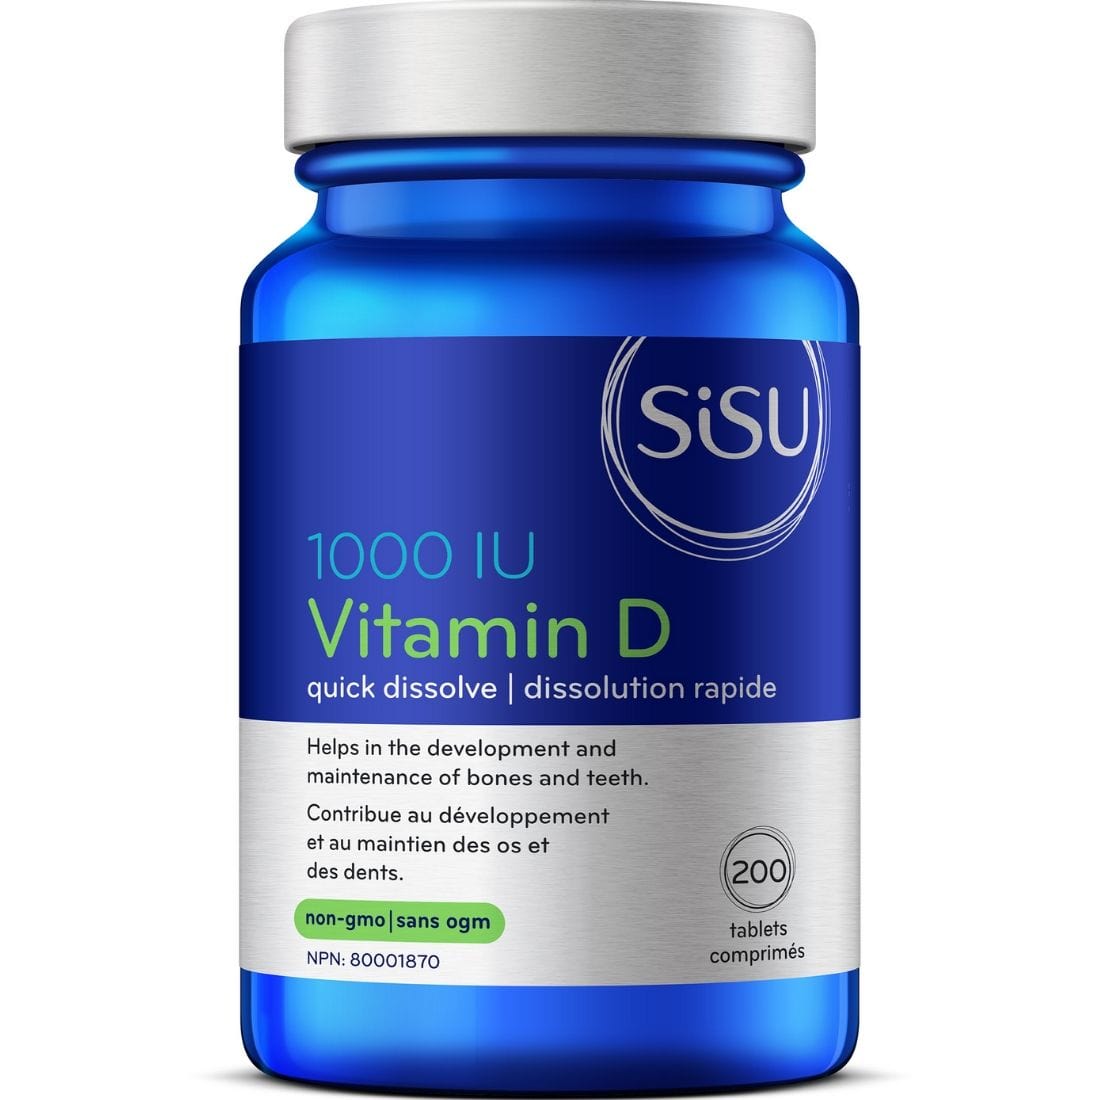 SISU Vitamin D, 1000IU